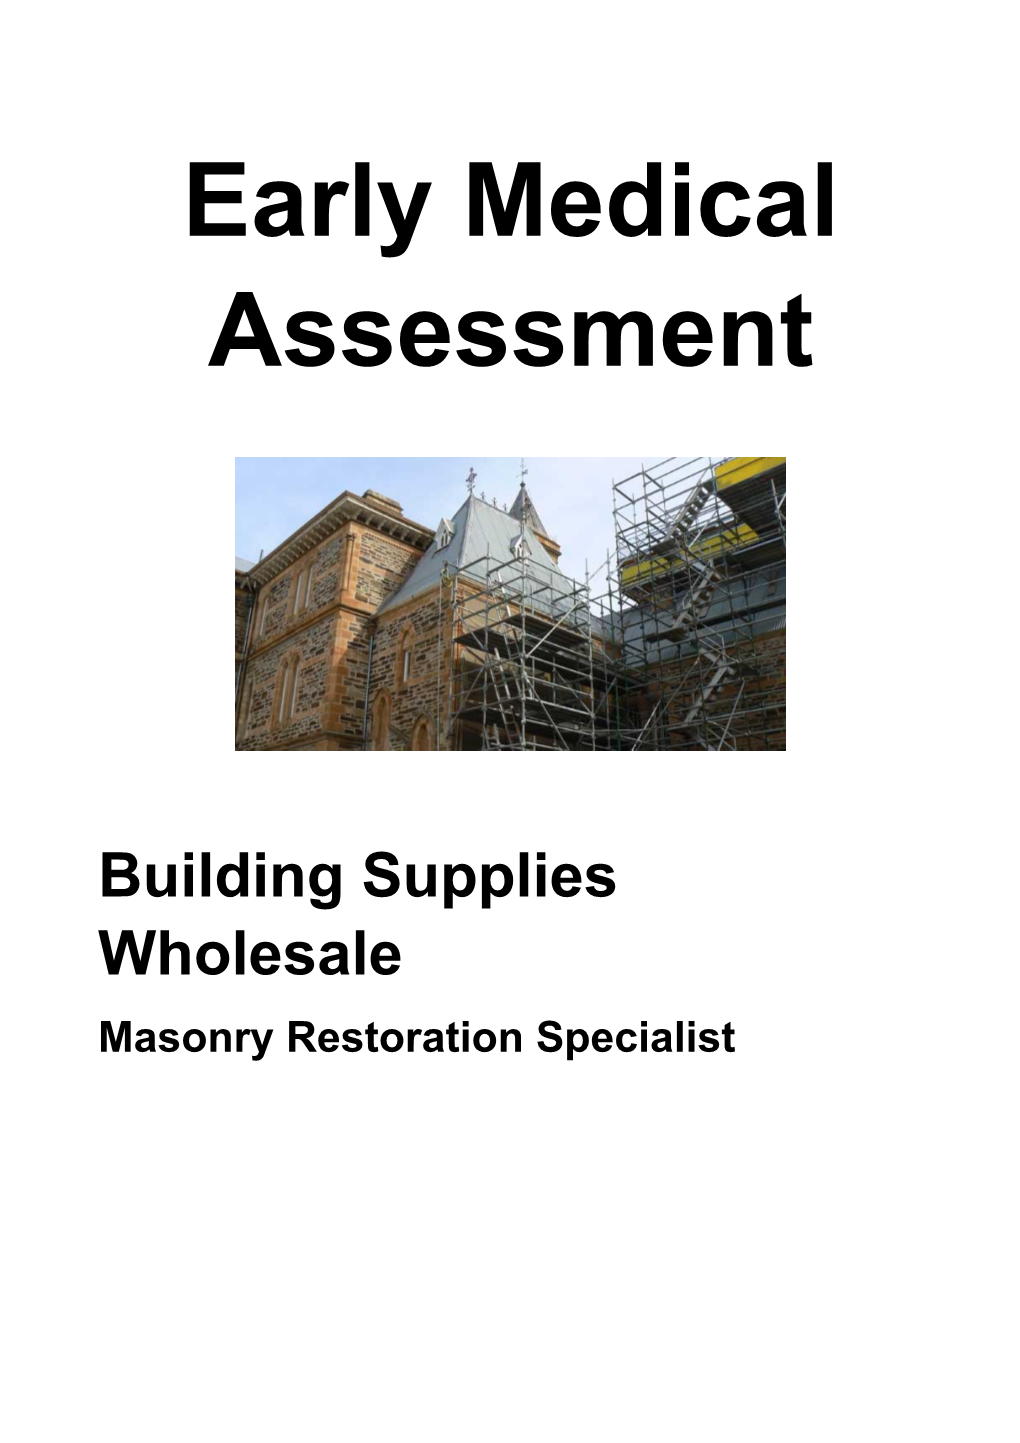 Building Supplies Wholesale - Masonry Resoration Specialist